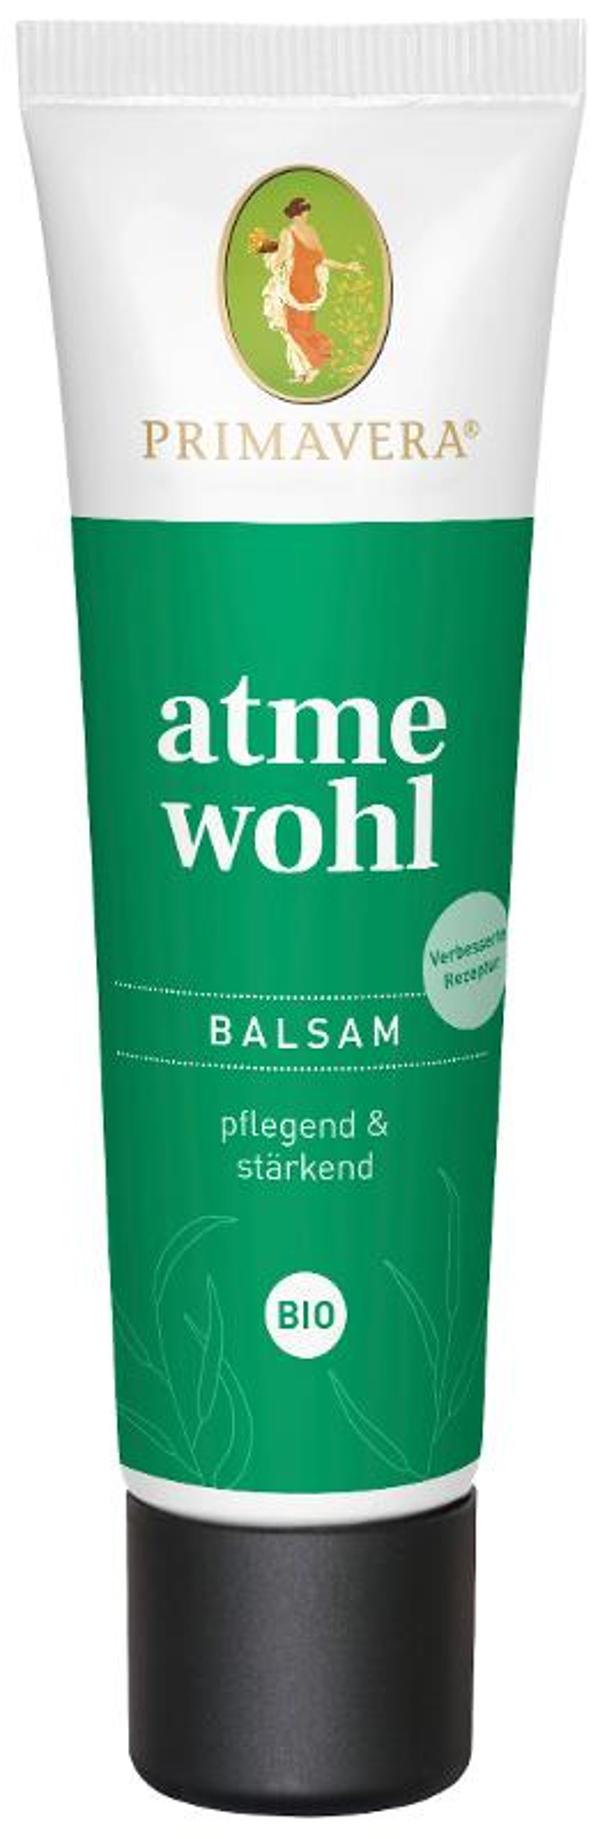 Produktfoto zu Atmewohl Balsam, 30 ml